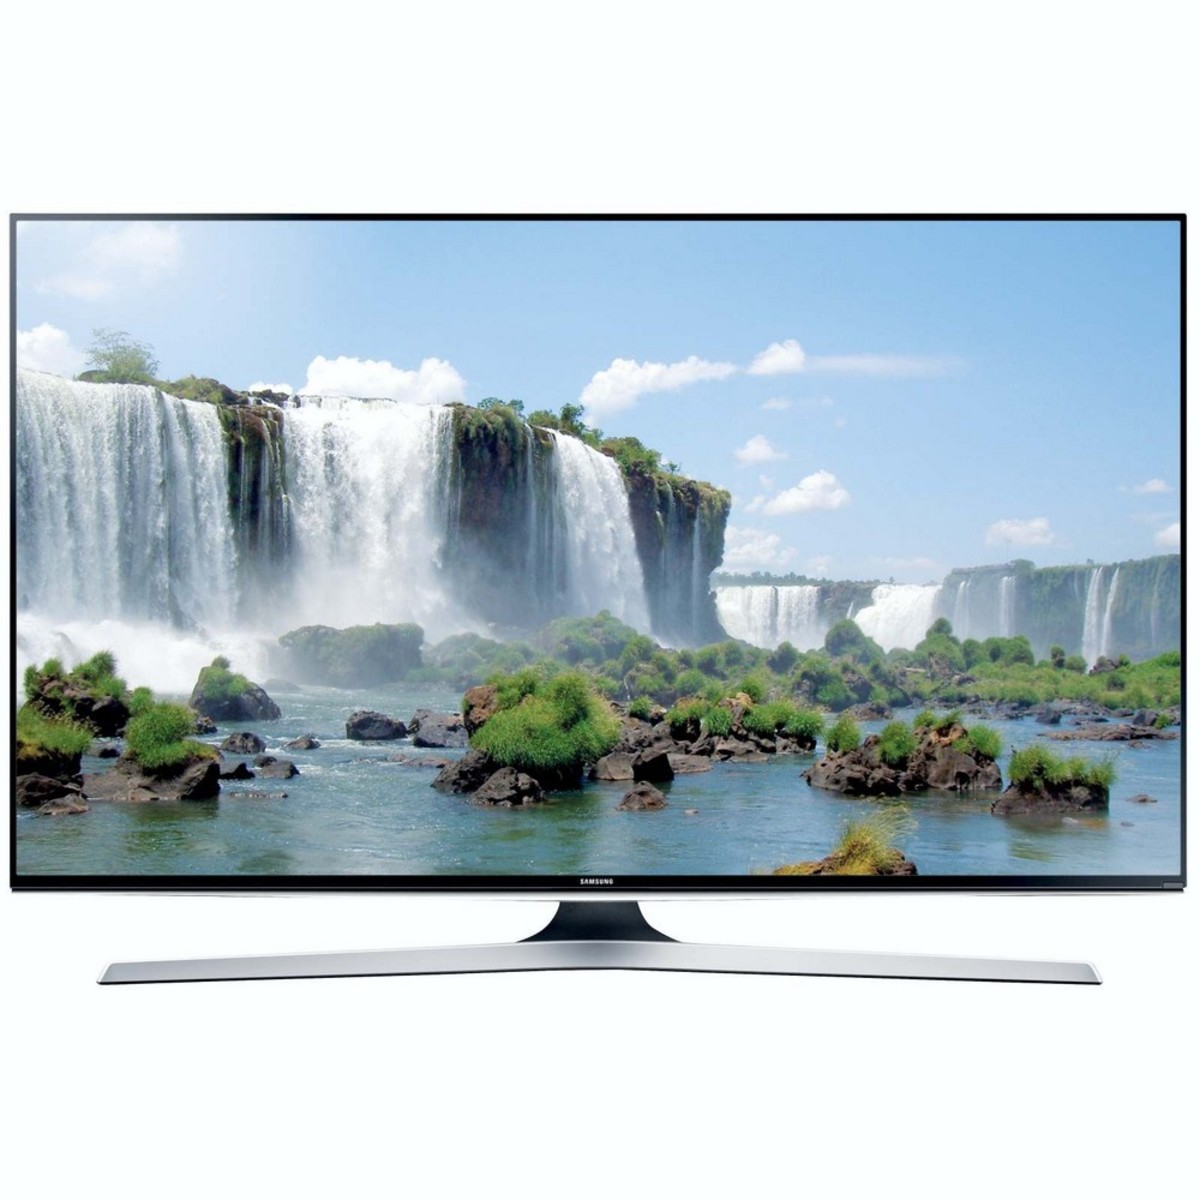 Samsung Full HD Flat Smart TV UA60J6200 60inch